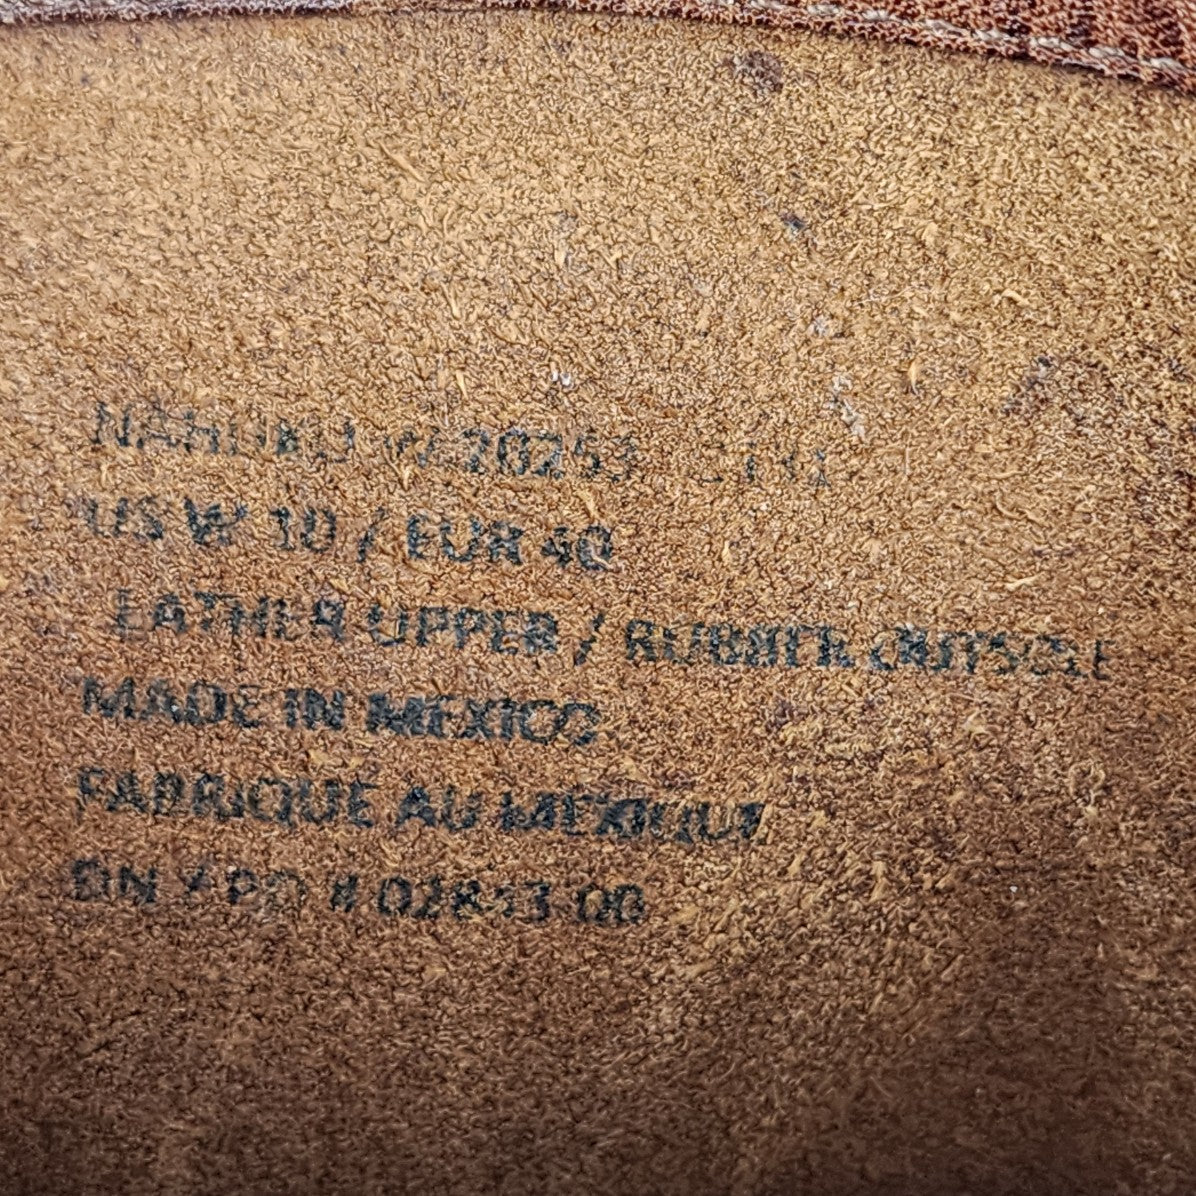 Olukai Brown Leather Riding Boots Size 10